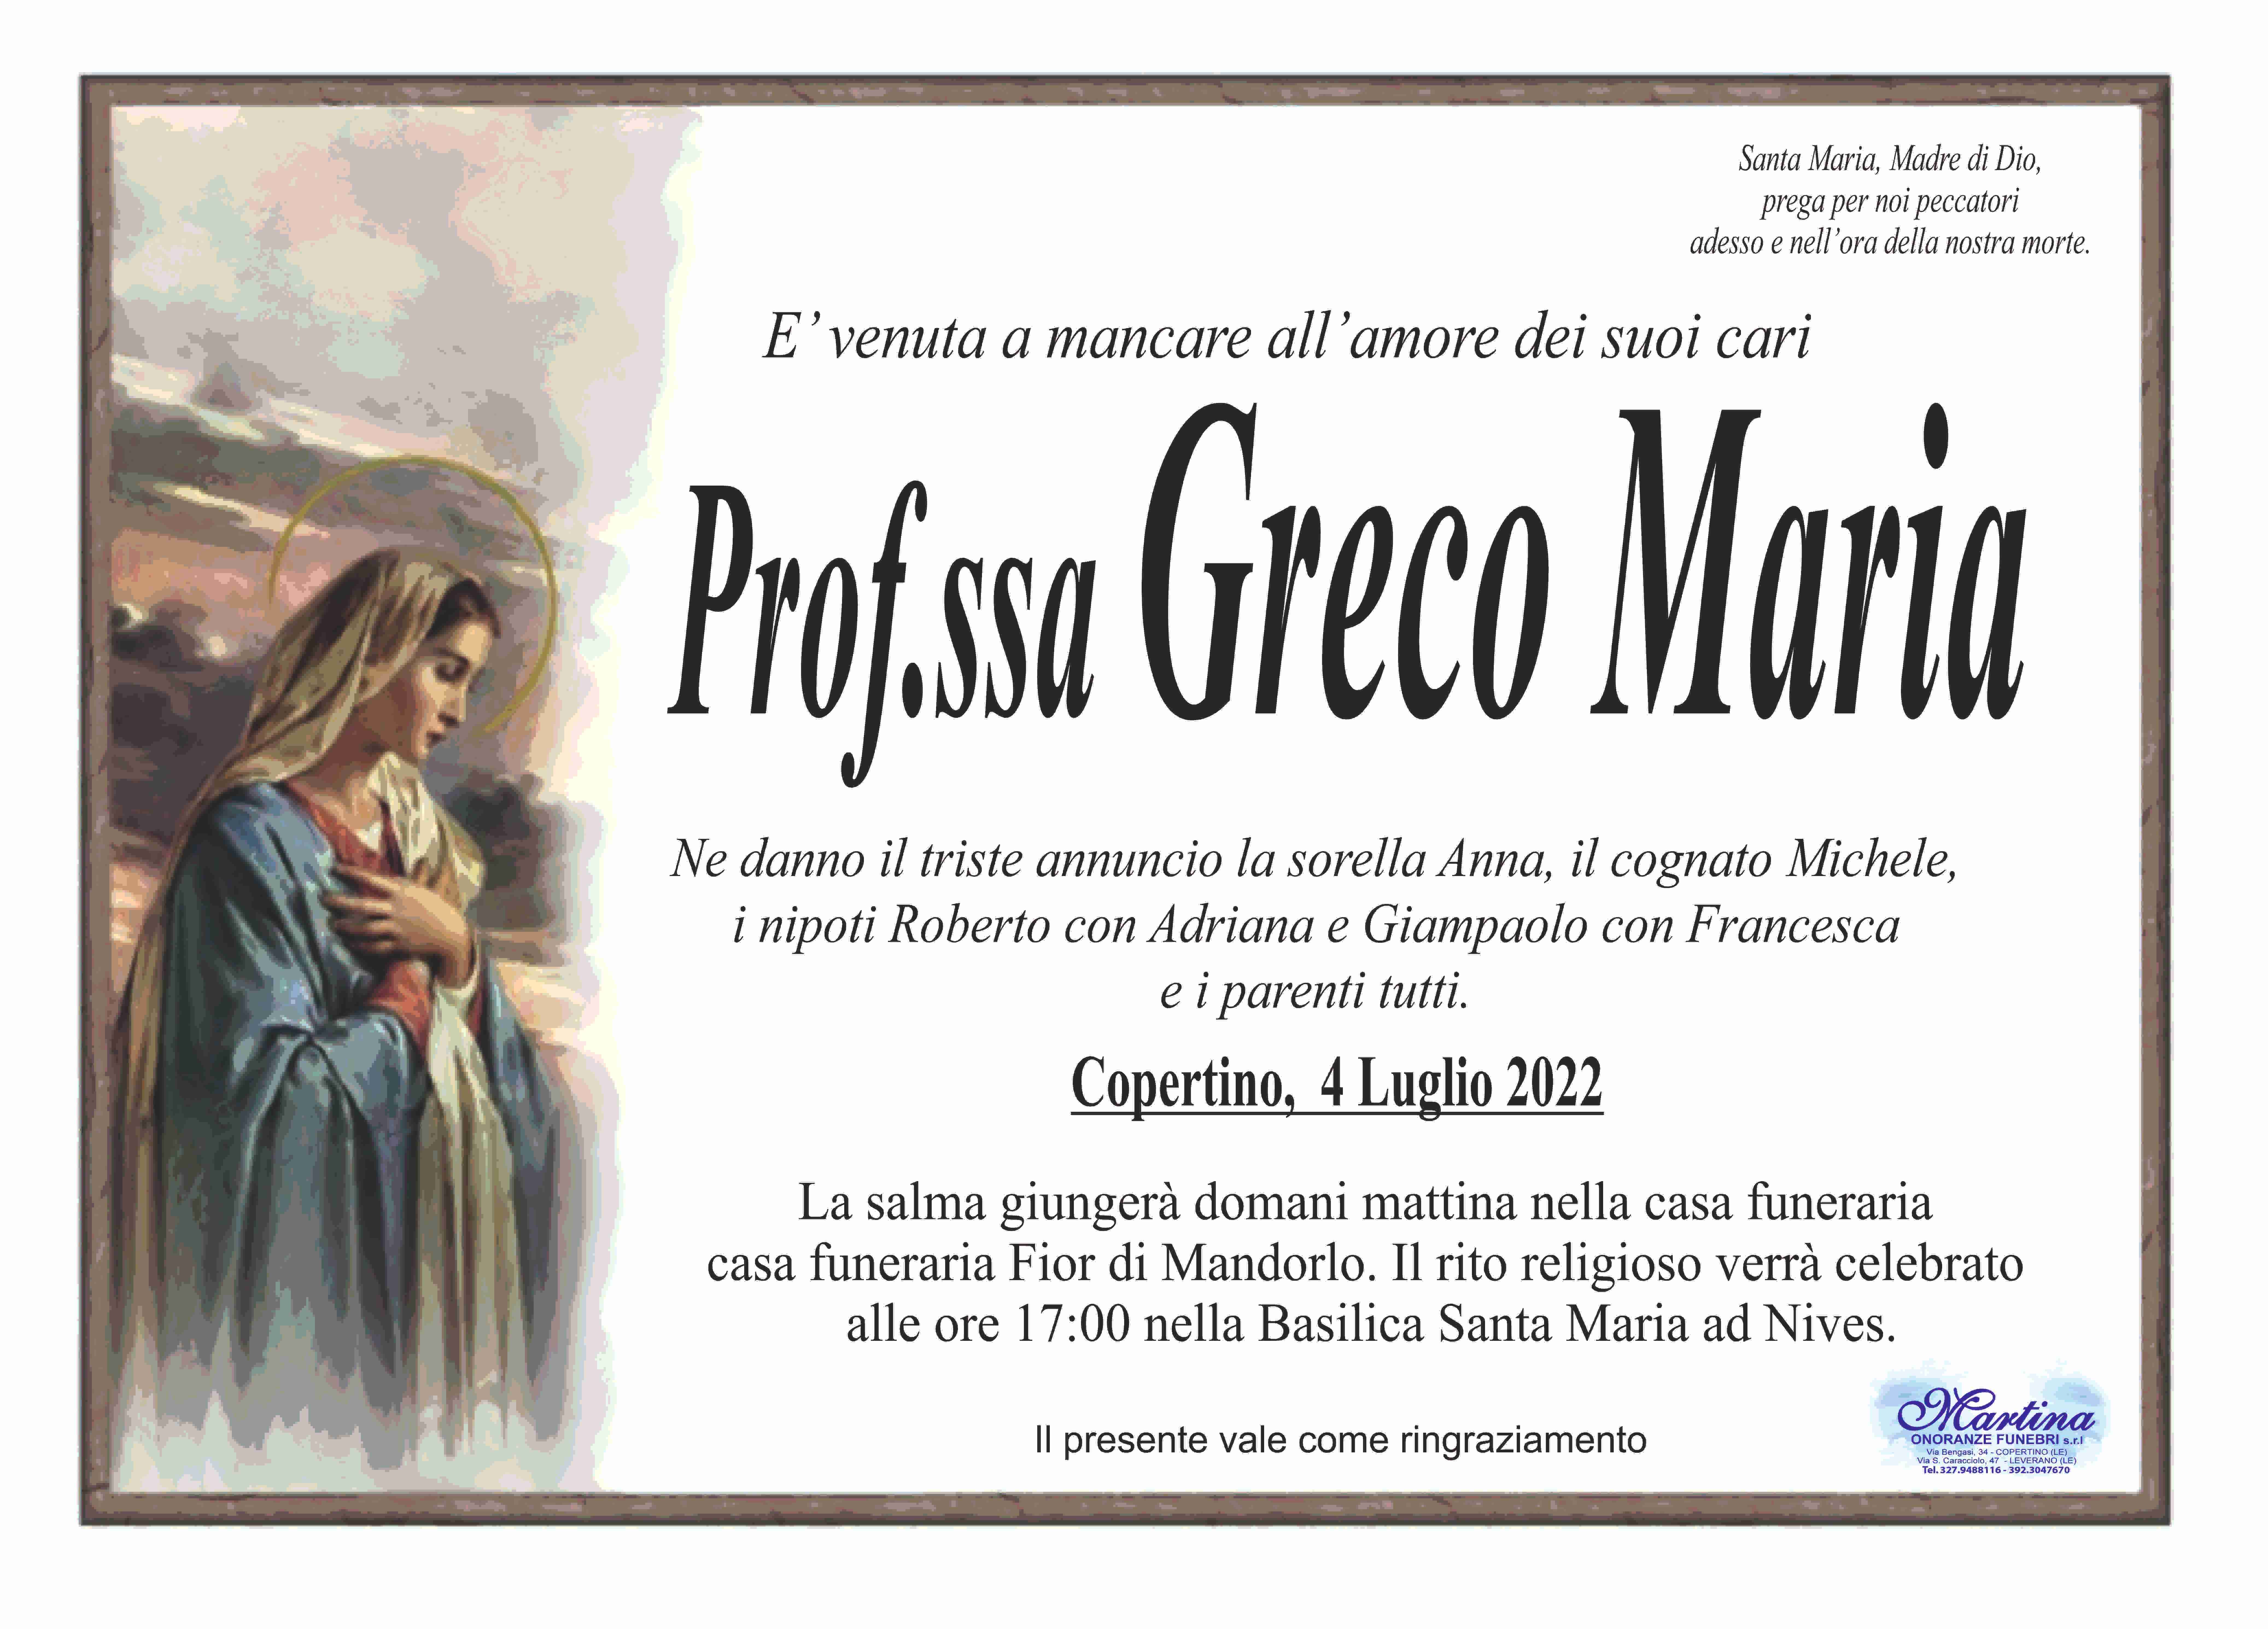 Maria Greco